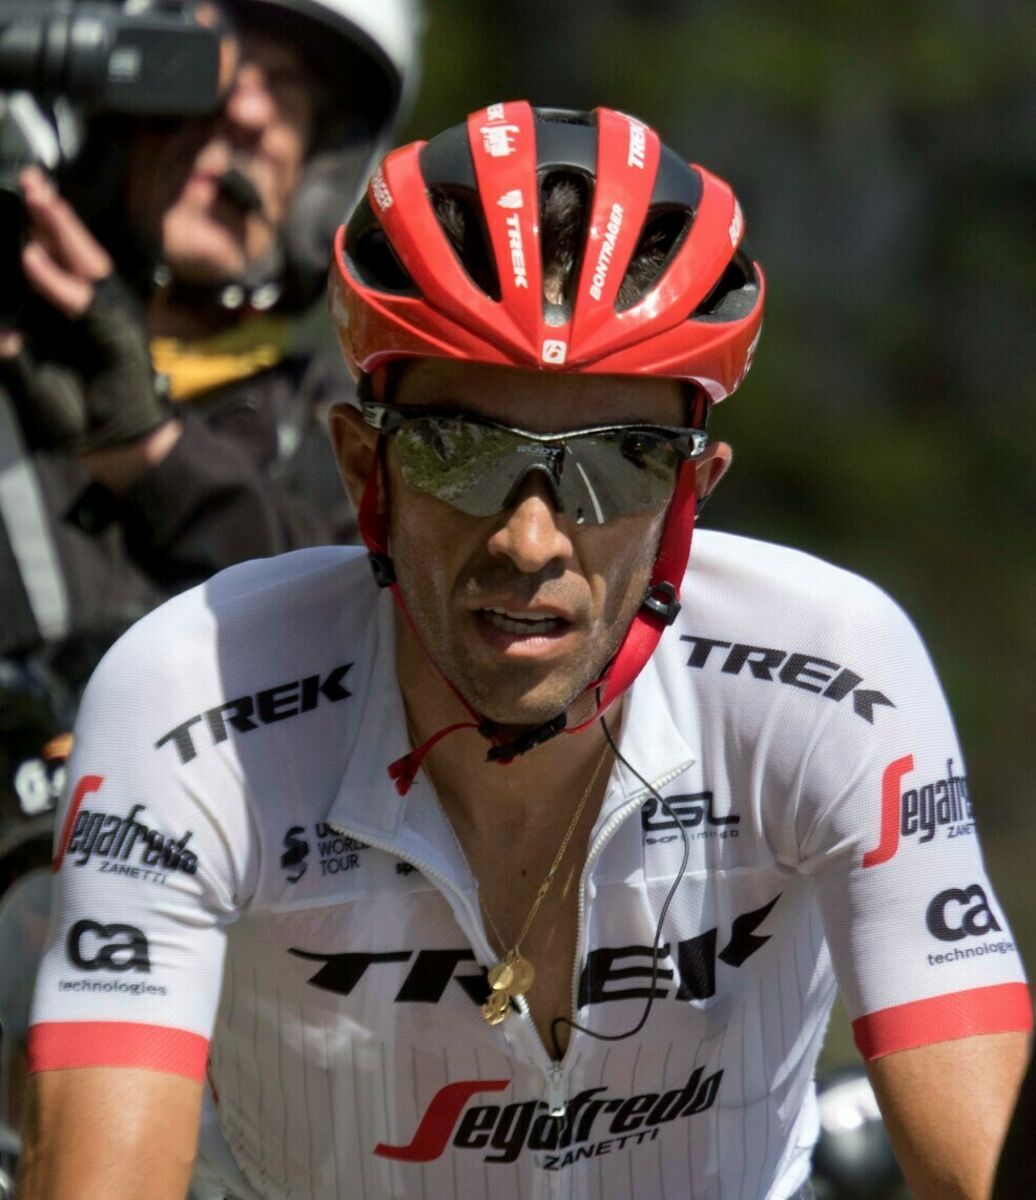 Alberto Contador - Famous Professional Road Racing Cyclist